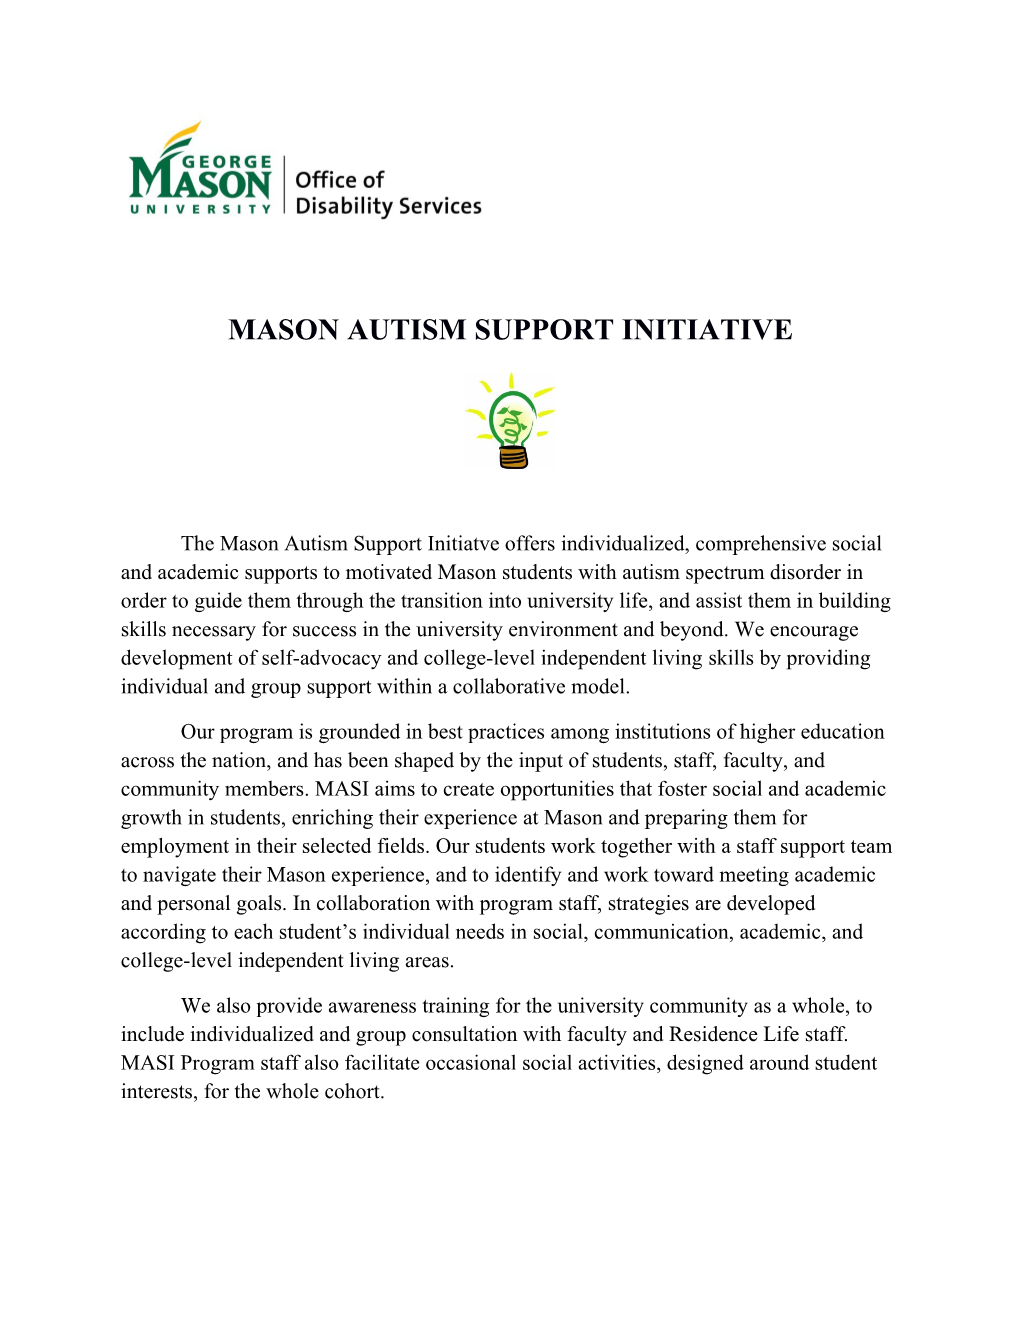 Mason Autism Support Initiative